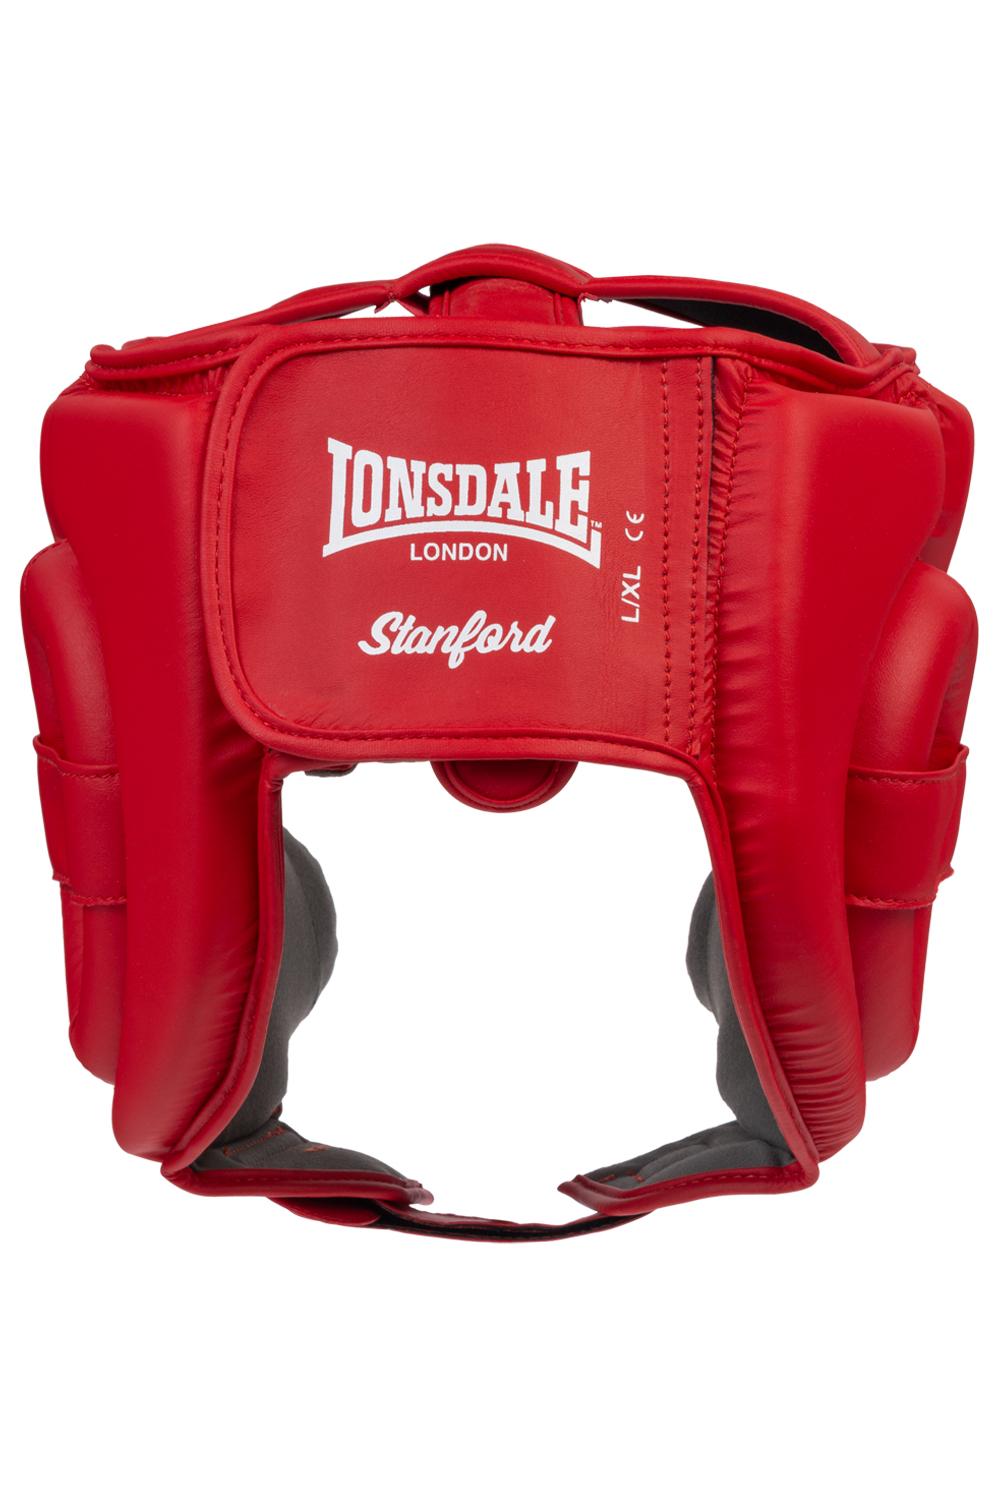 Lonsdale Boxing Kopfschutz - red